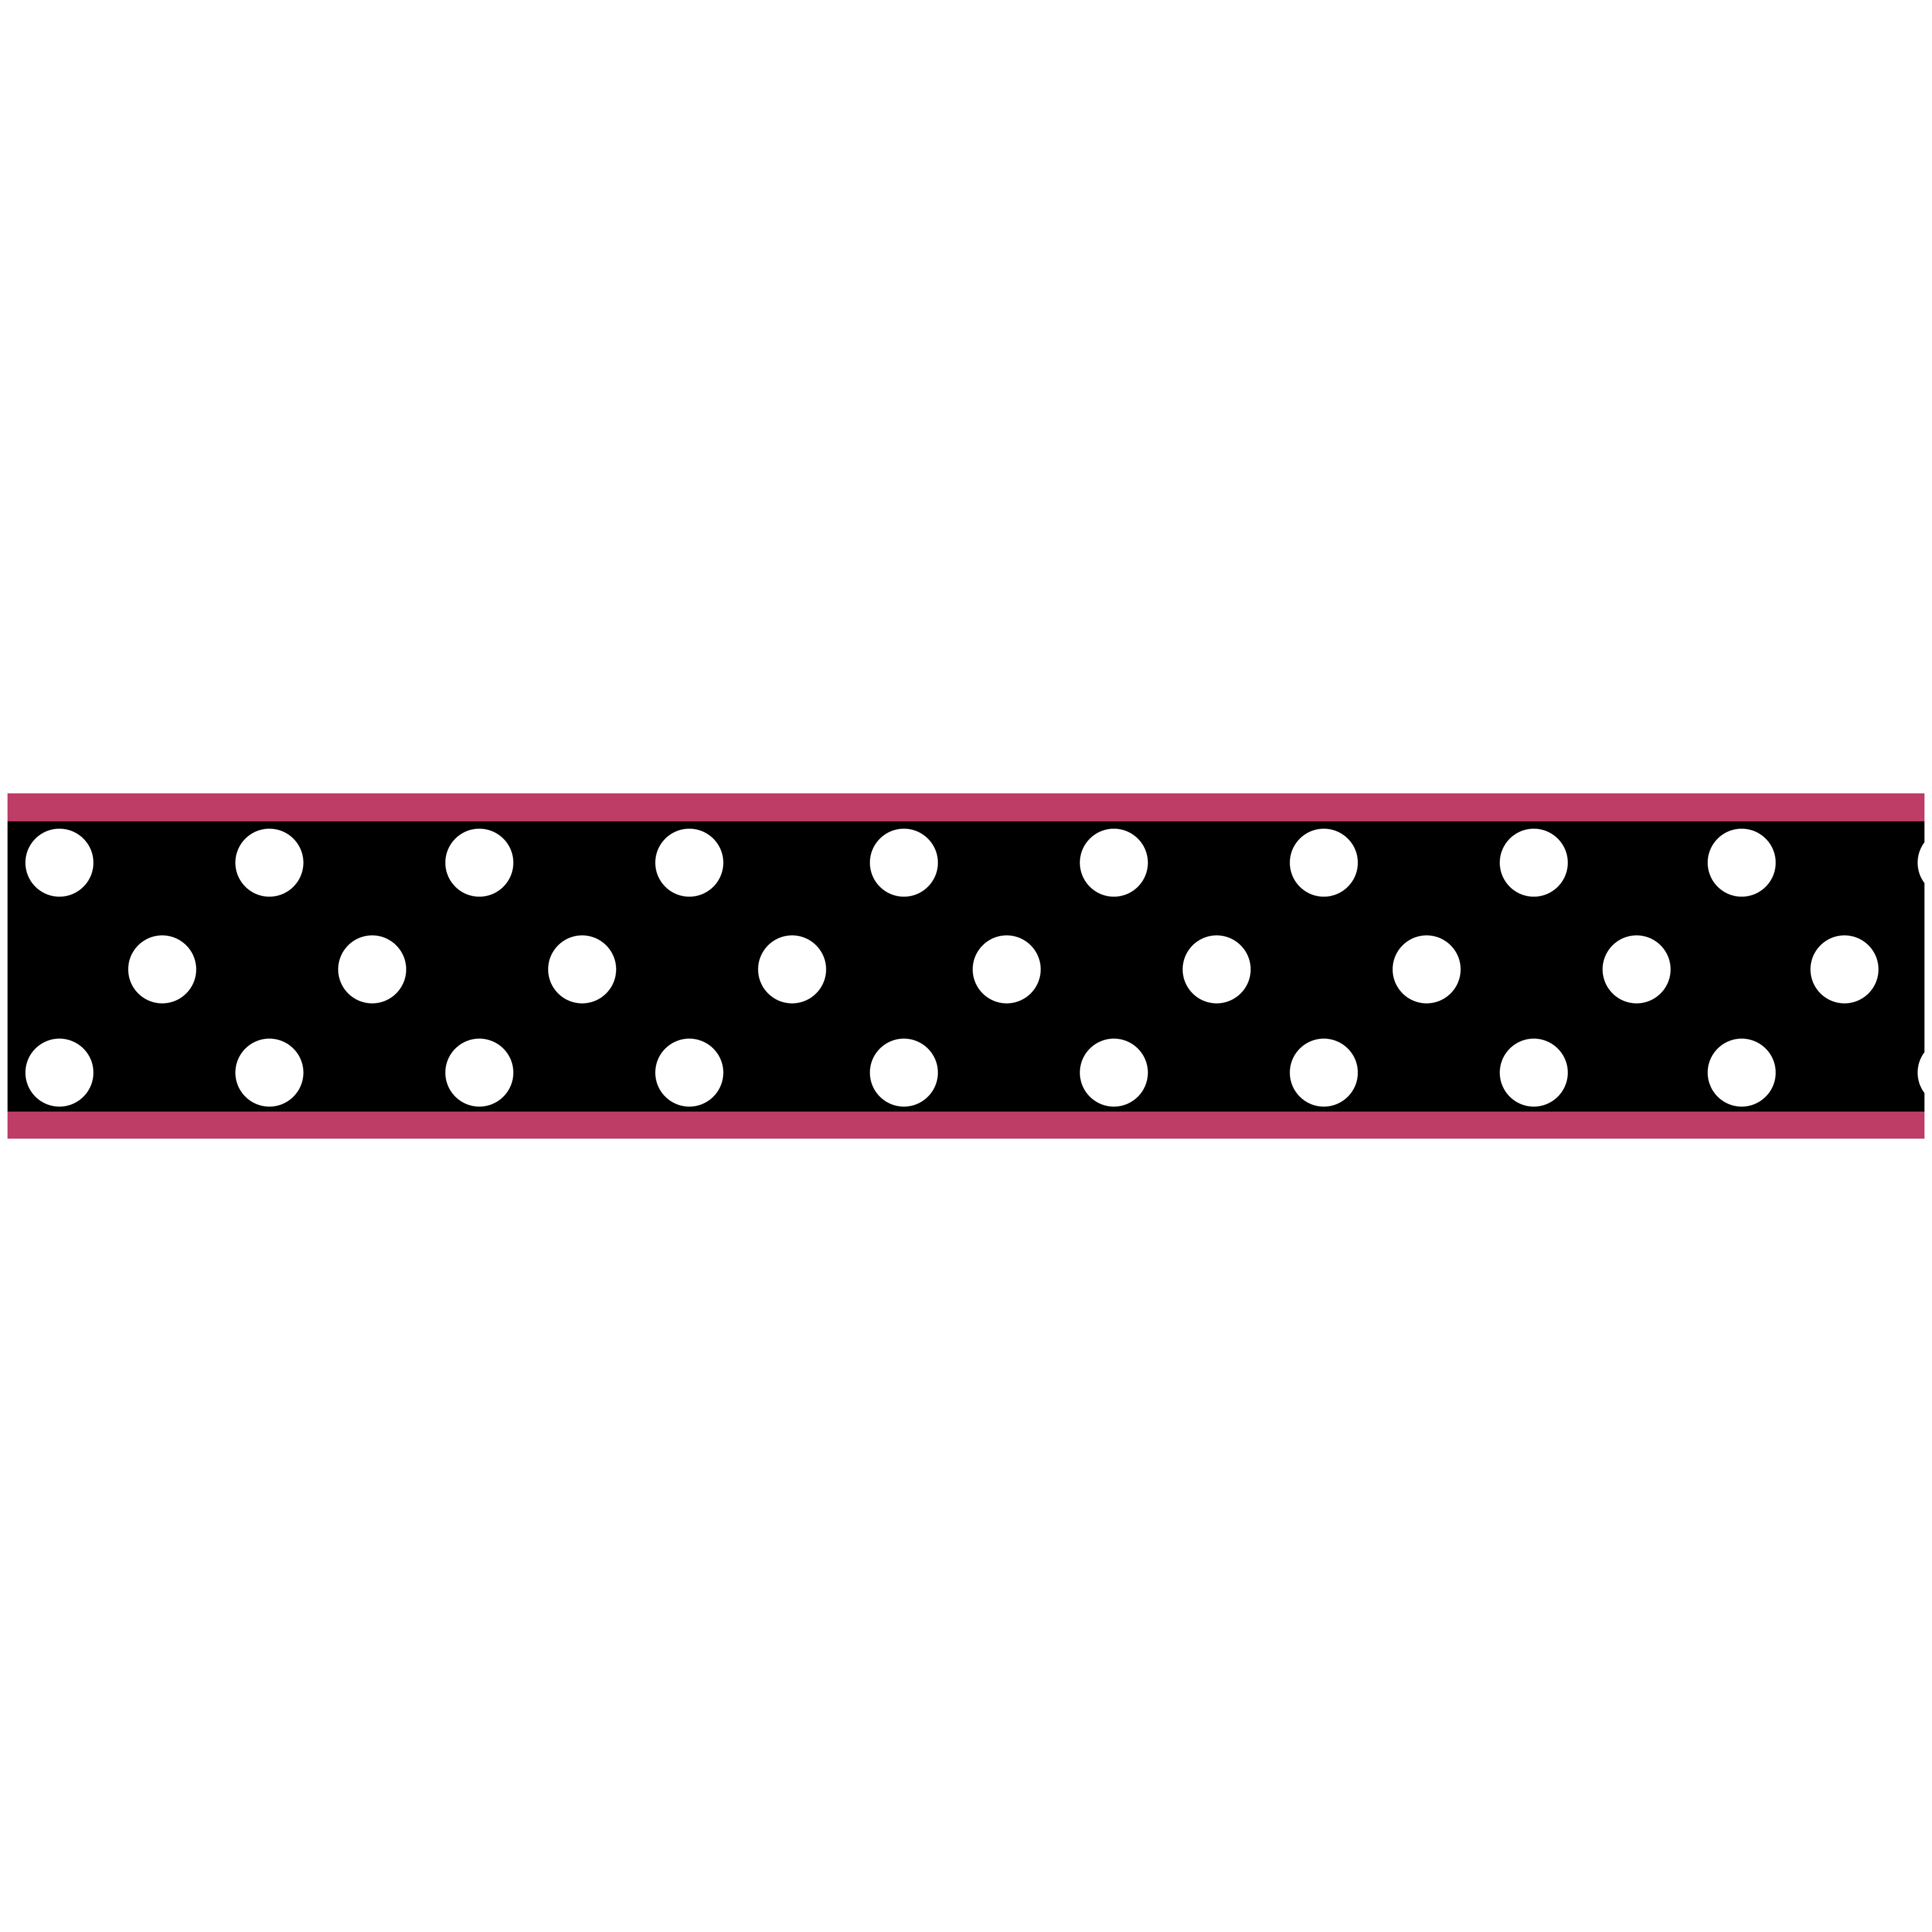 Sweet JoJo Designs Pink and Black Hot Dot Wall Border L15395936jpg